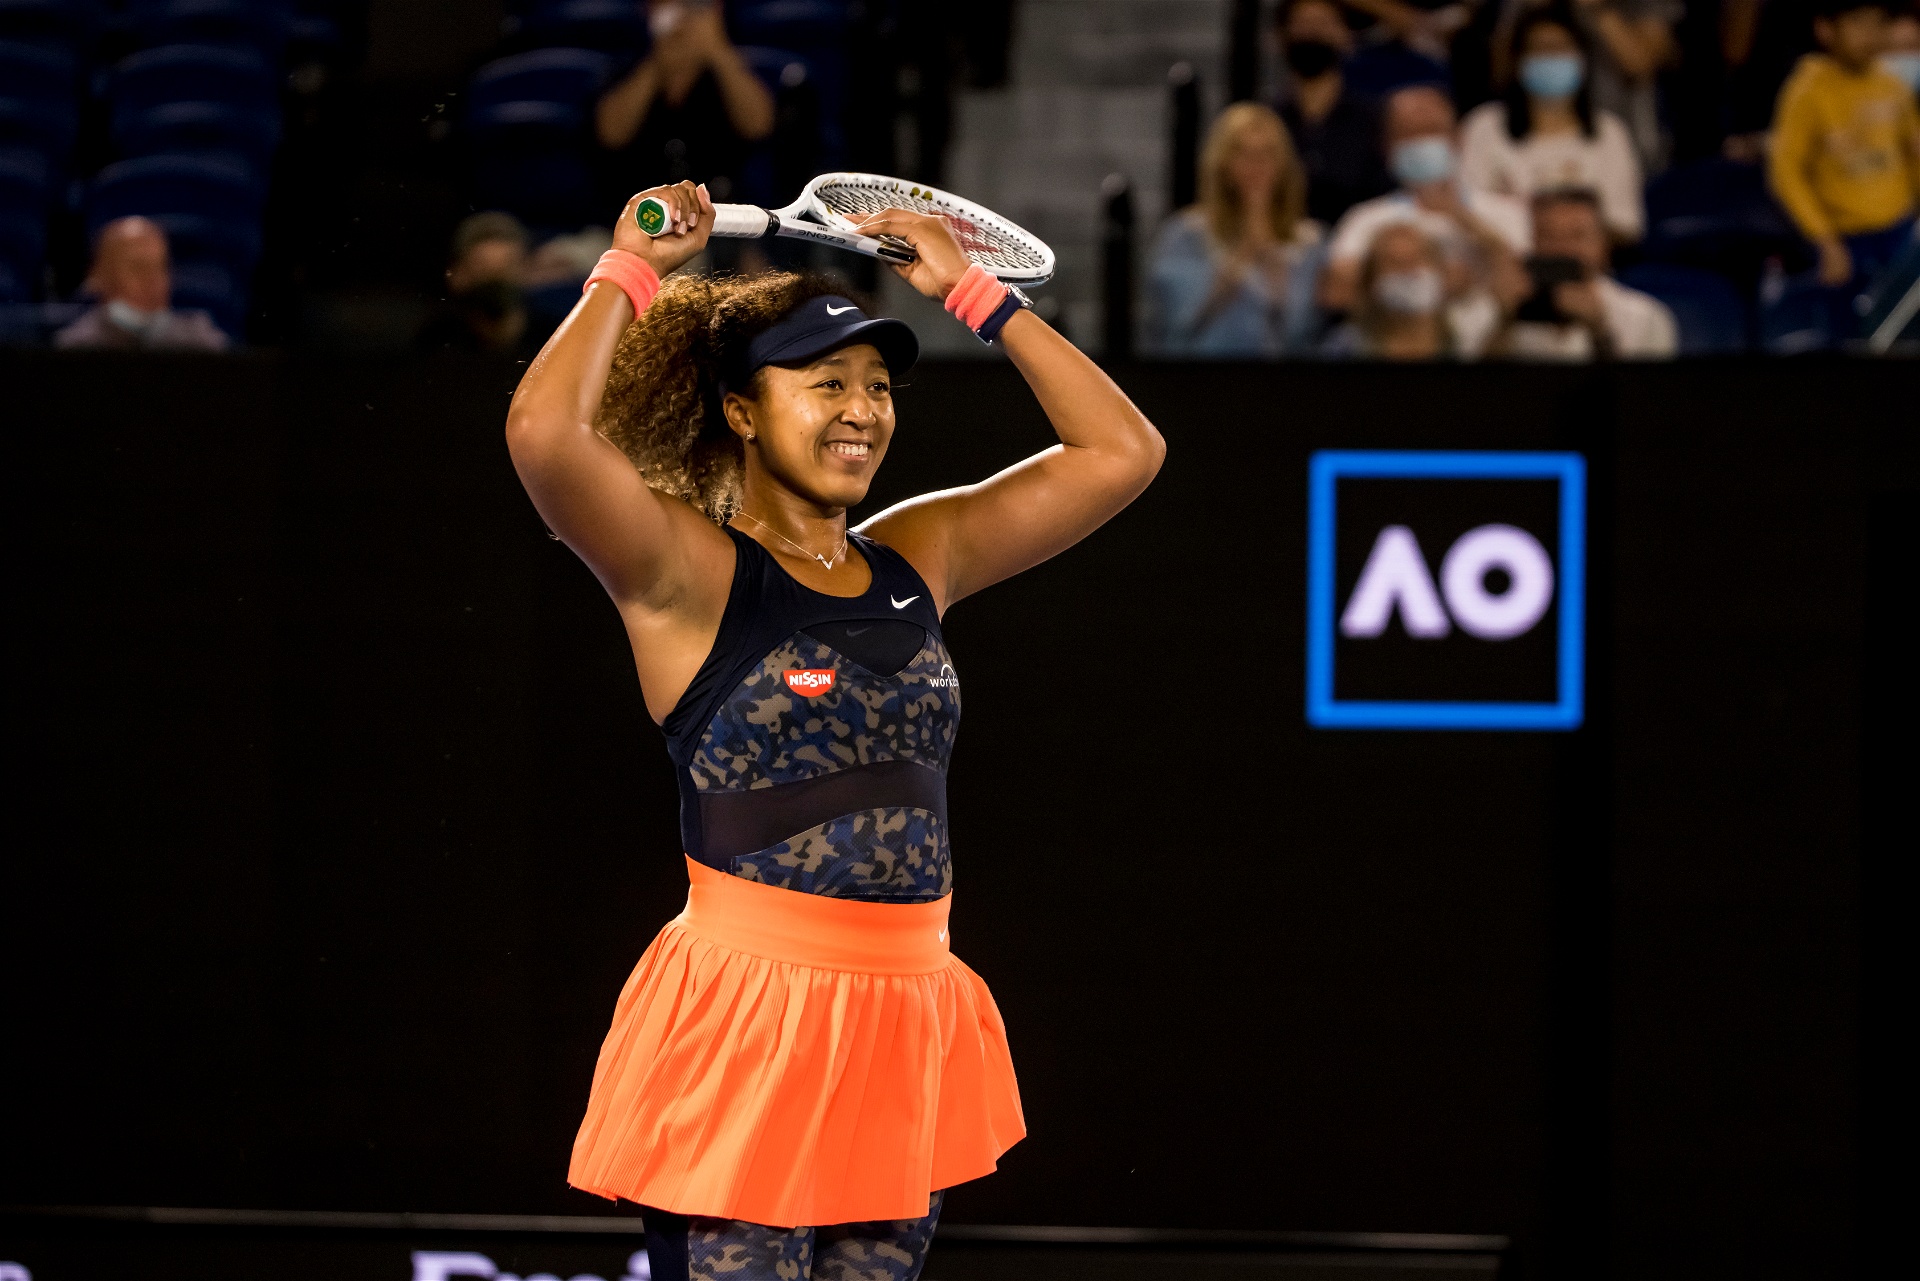 Australian Open 2021: Naomi Osaka wins, and an era begins